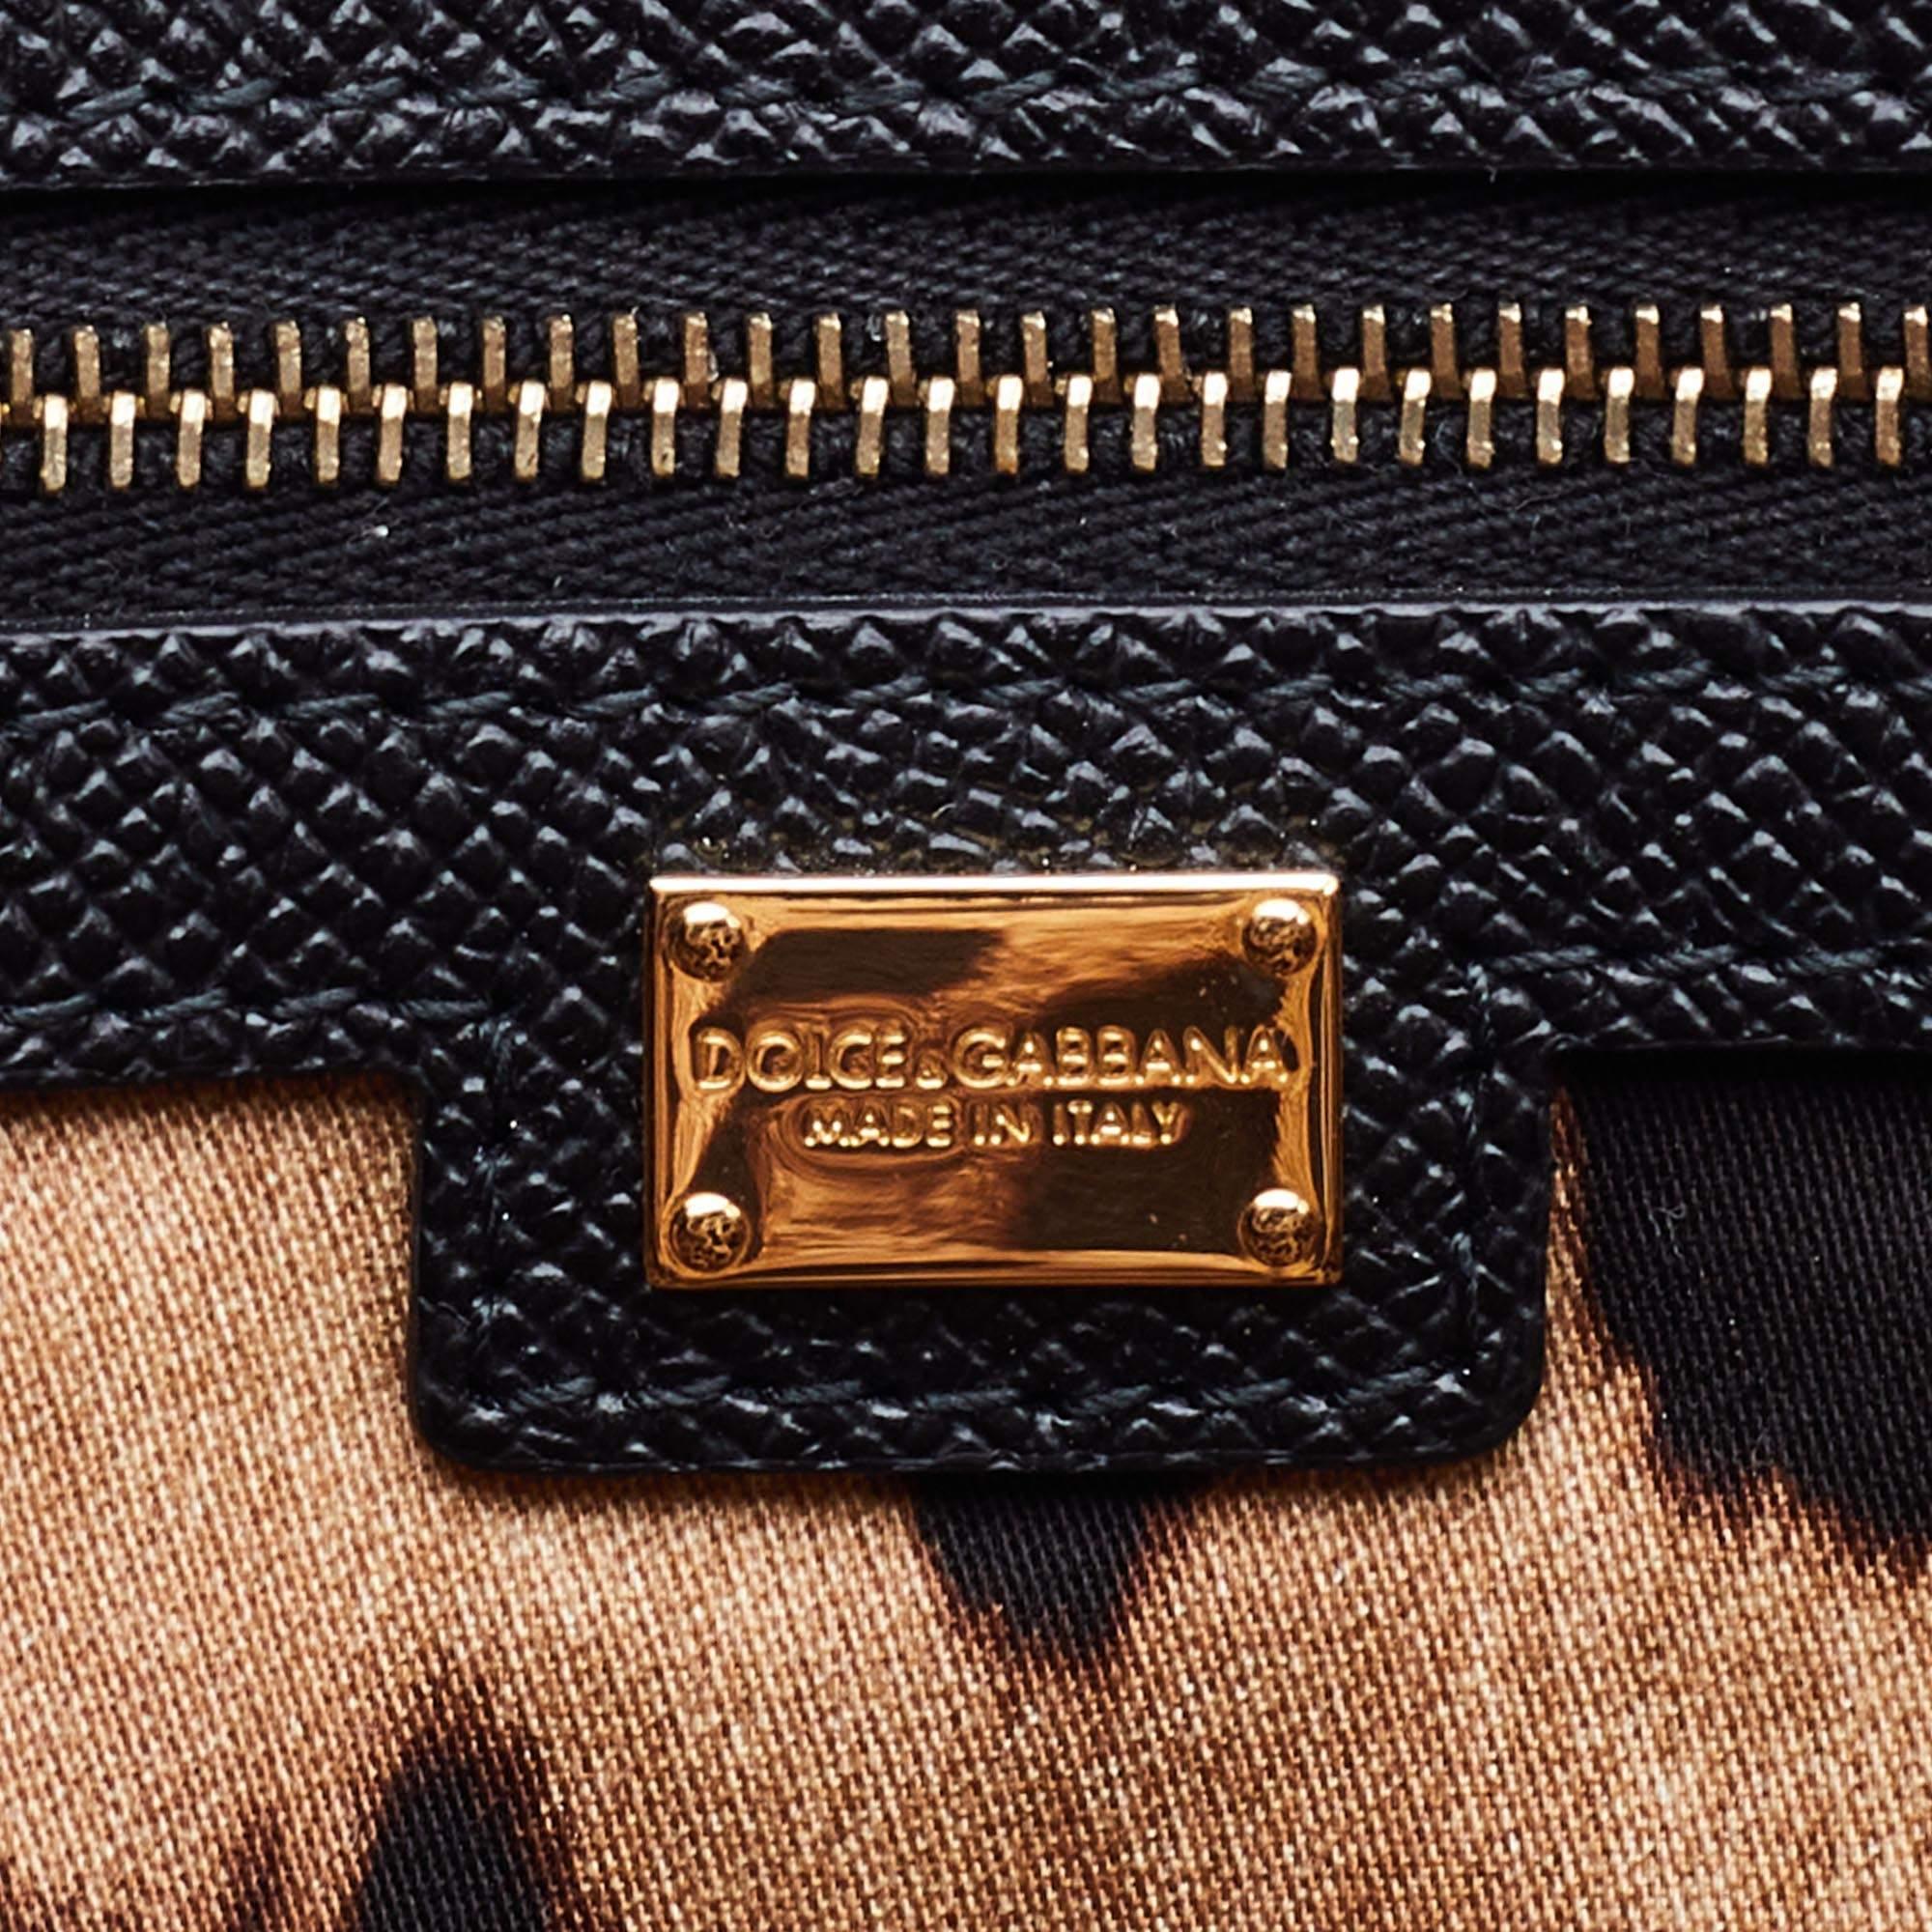 Dolce & Gabbana Black Leather Miss Escape Shopper Tote 6